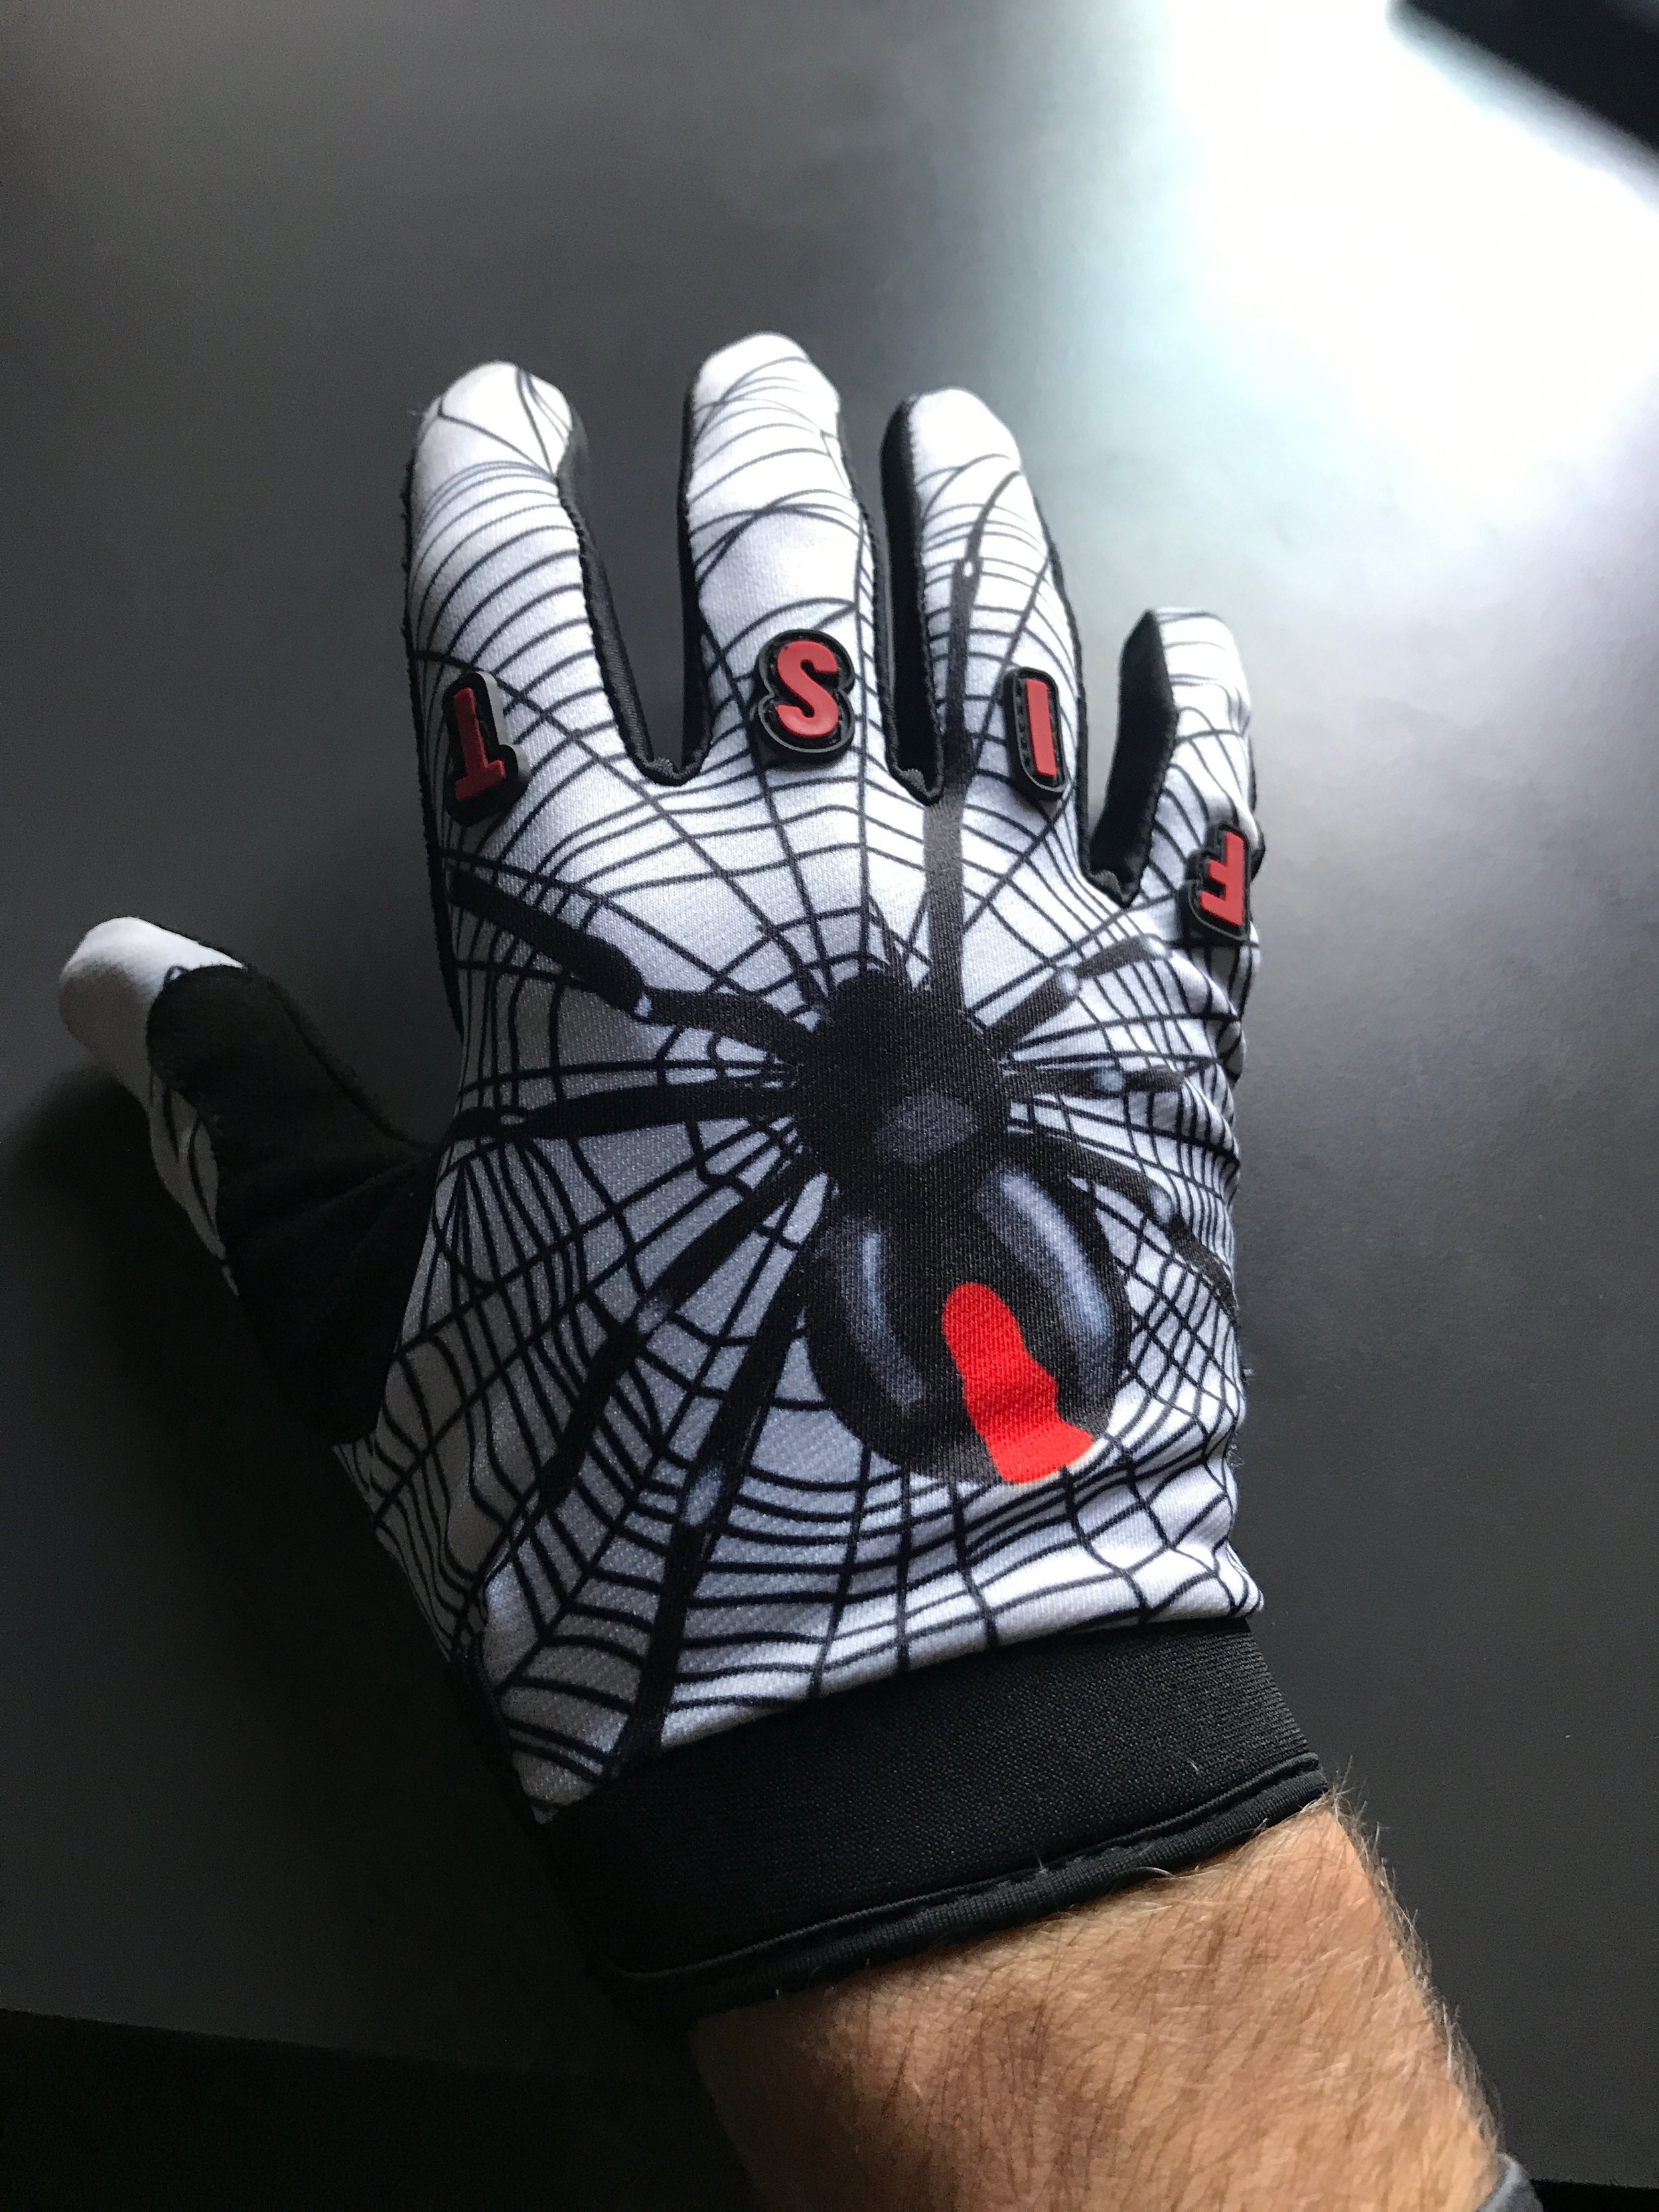 Mick’s Picks: The Fist Red Back Glove